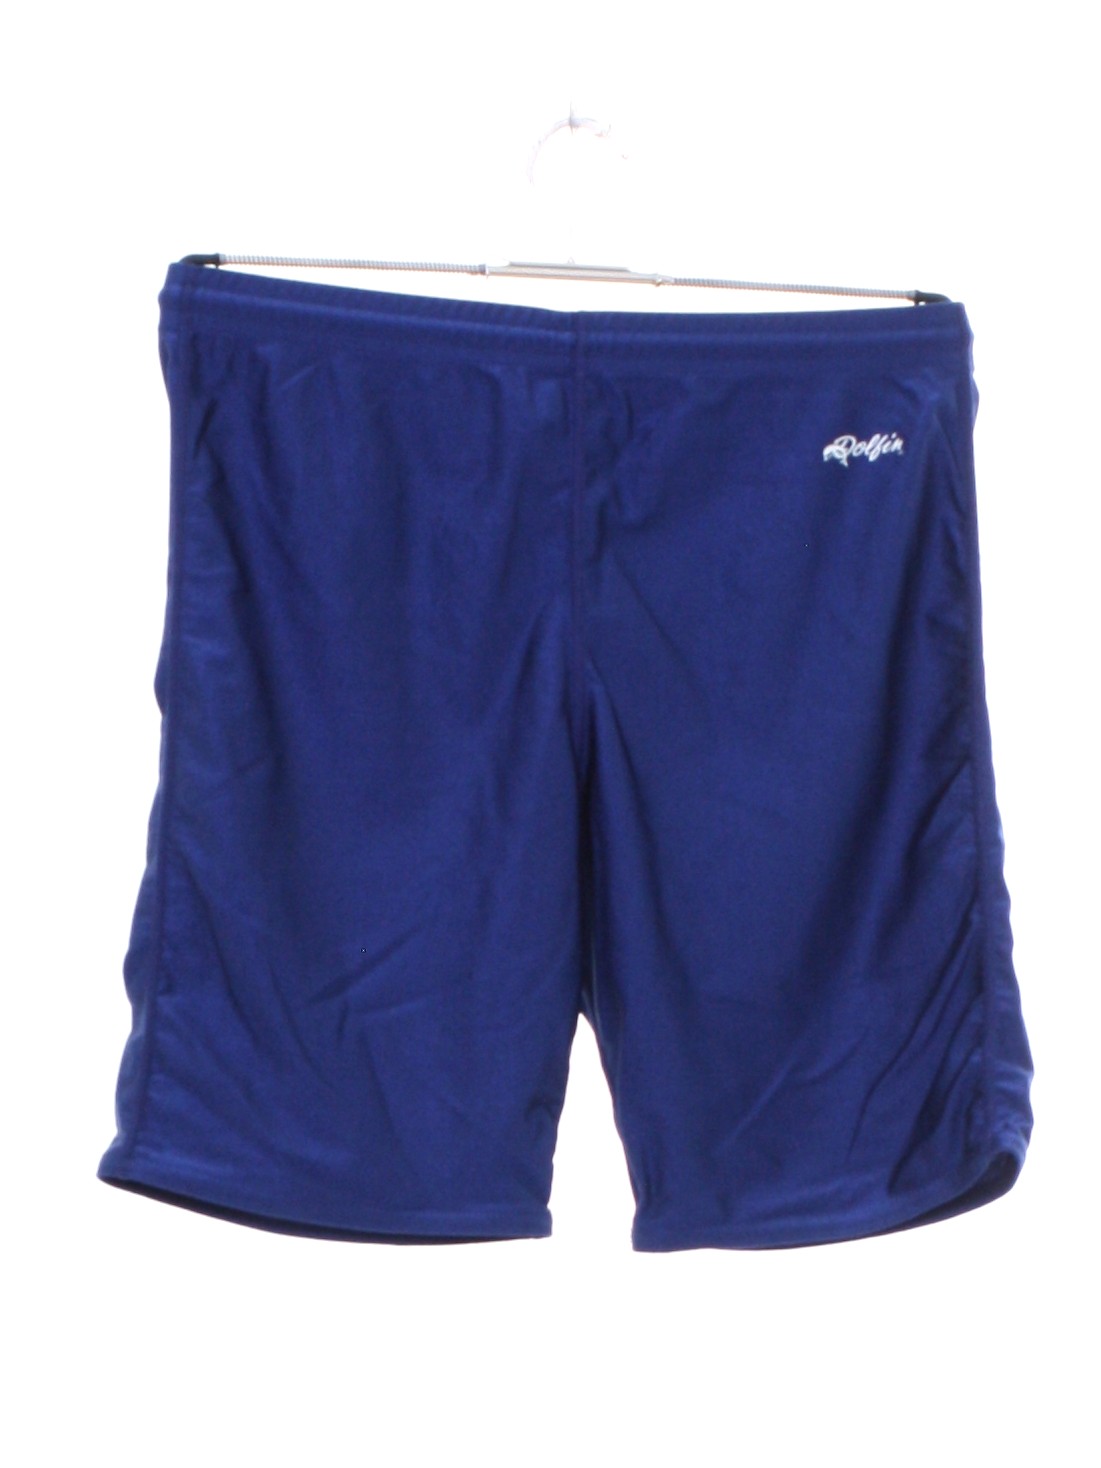 80's Vintage Shorts: Late 80s or Early 90s -Dolfin International- Unisex  shiny blue background nylon spandex blend bike shorts Elastic waistline  with a white -dolfin- logo on the upper left hip area.